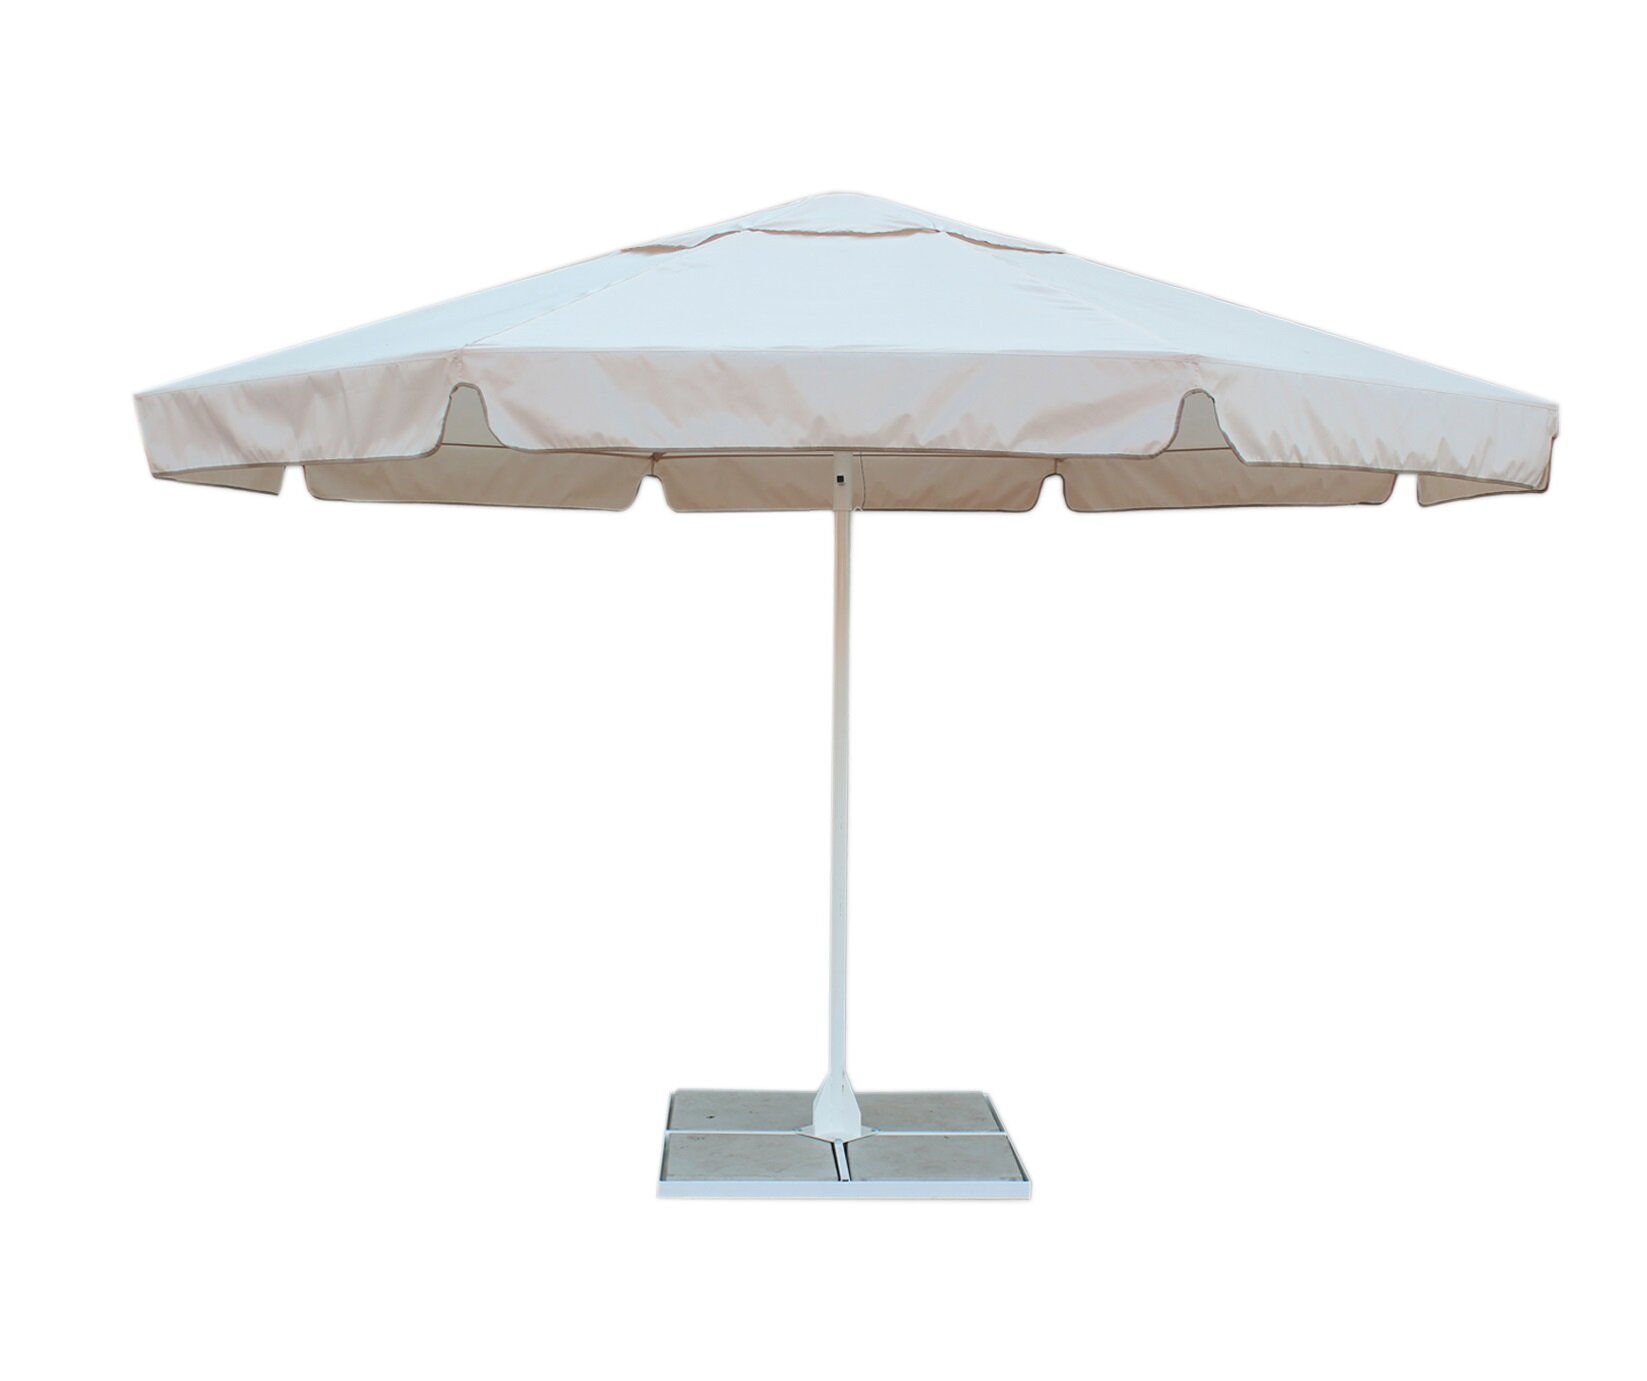 Пляжный зонт круглый 3,5 метра